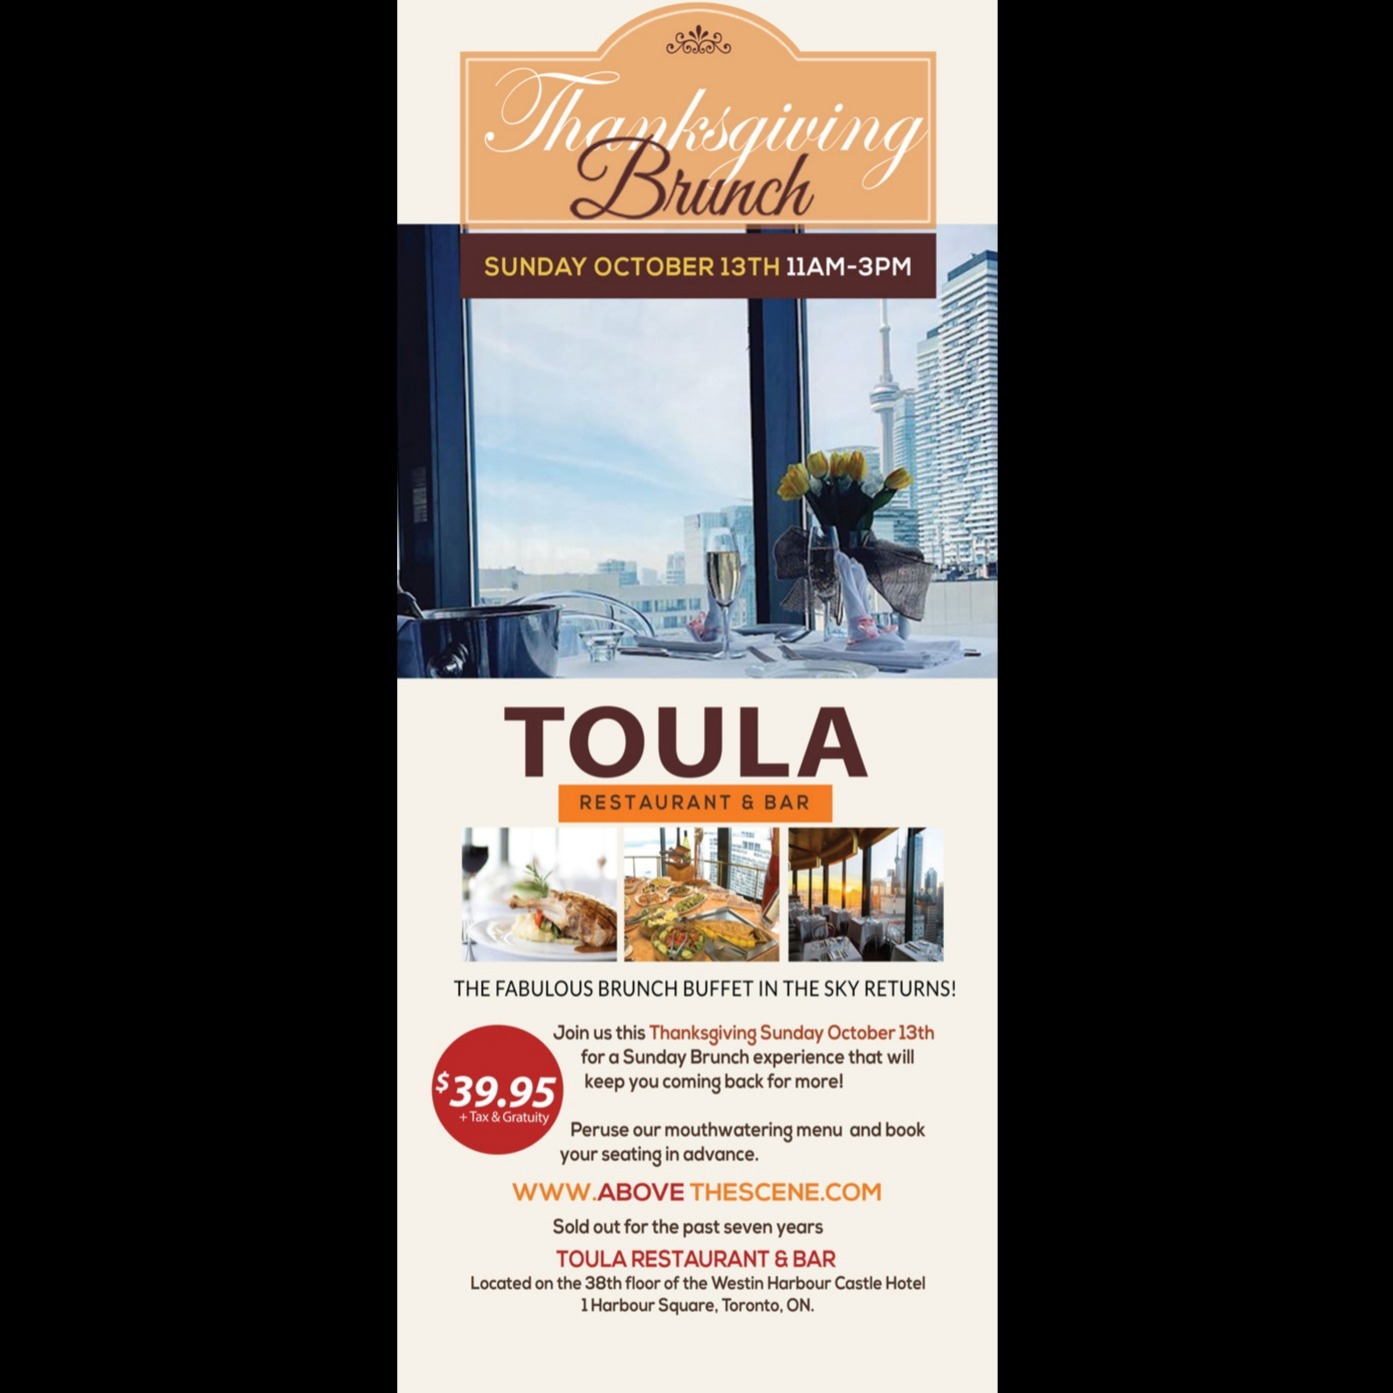 Toula Restaurant & Bar - Thanksgiving Brunch 